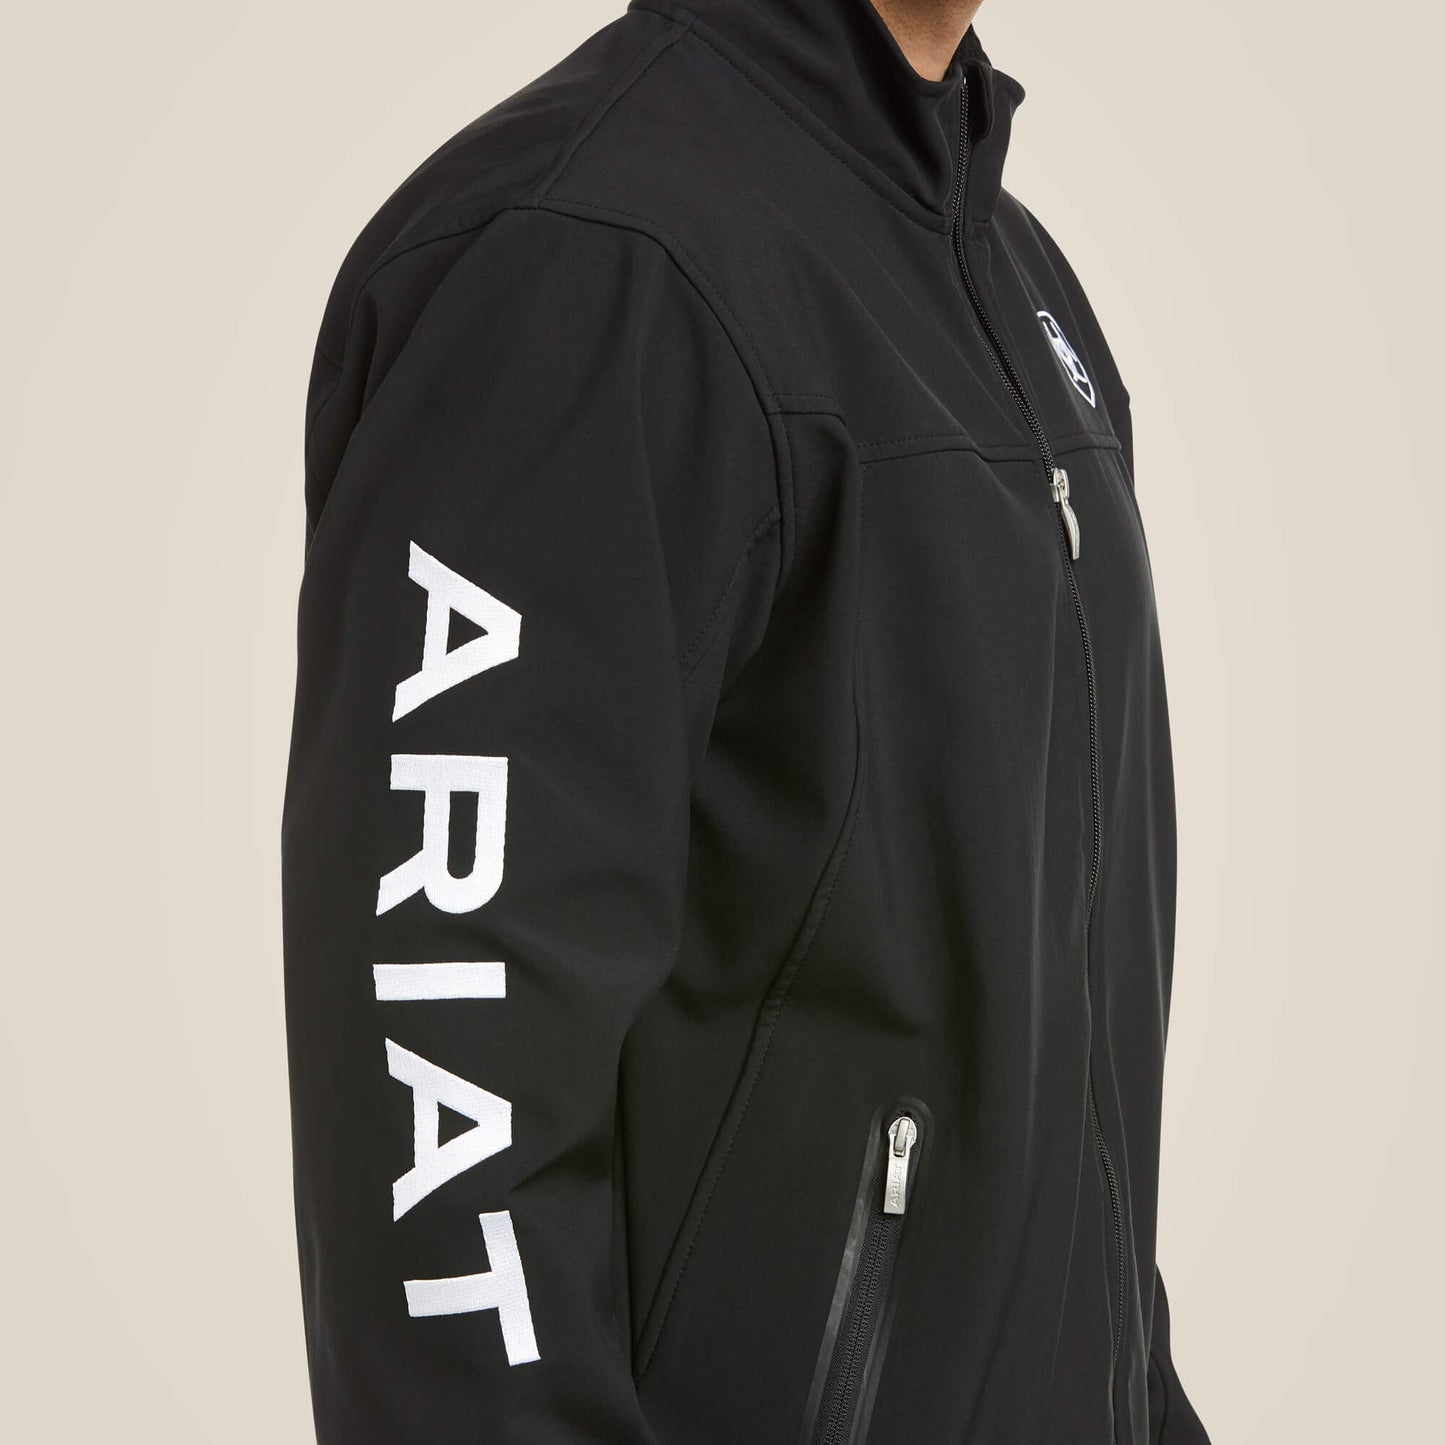 Ariat New Team Softshell Jacket 10019279